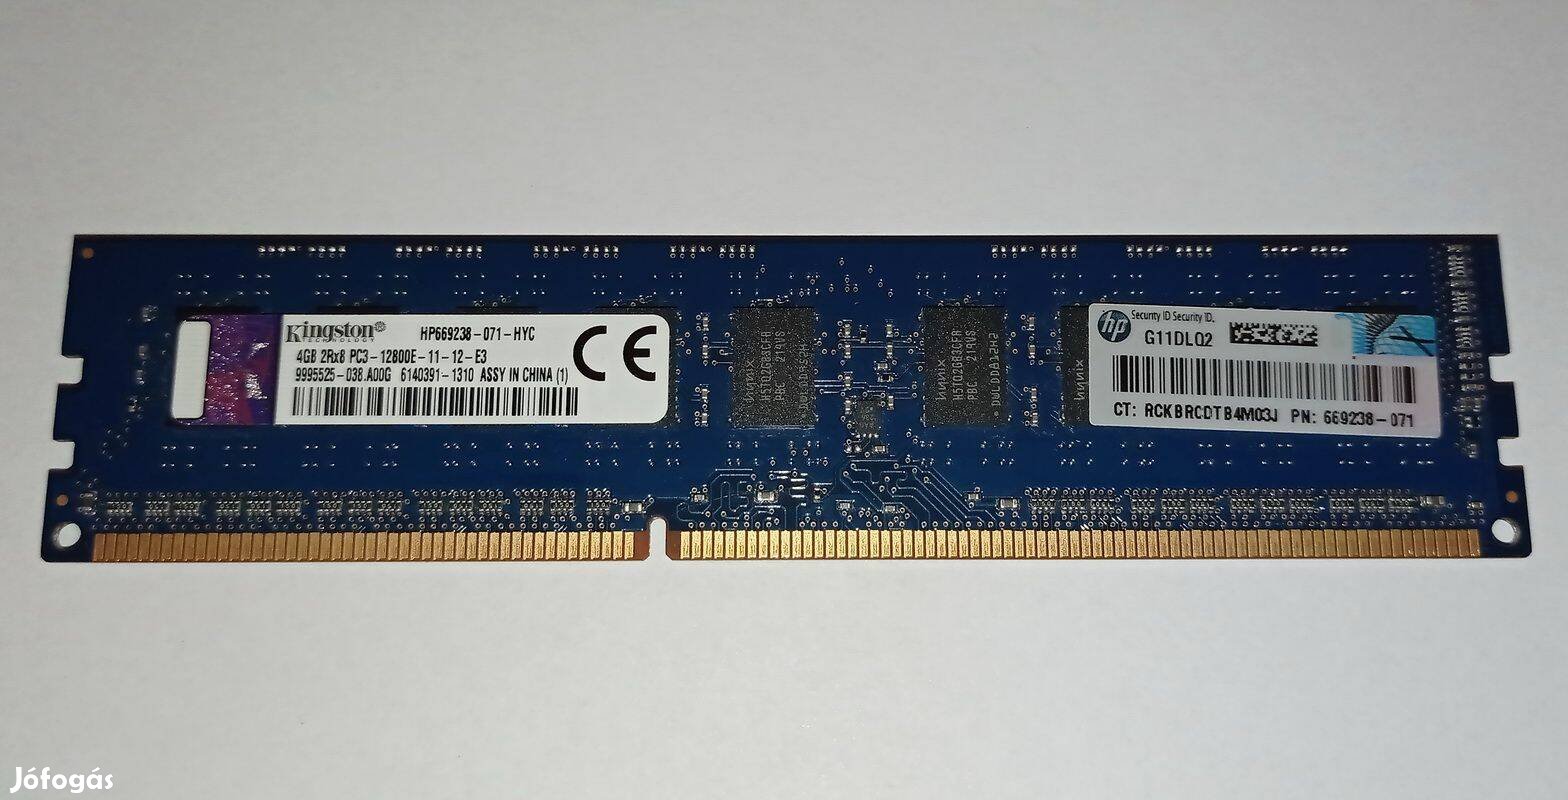 Kingston HP669238-071-Hyc 4GB Unbuffered Server RAM